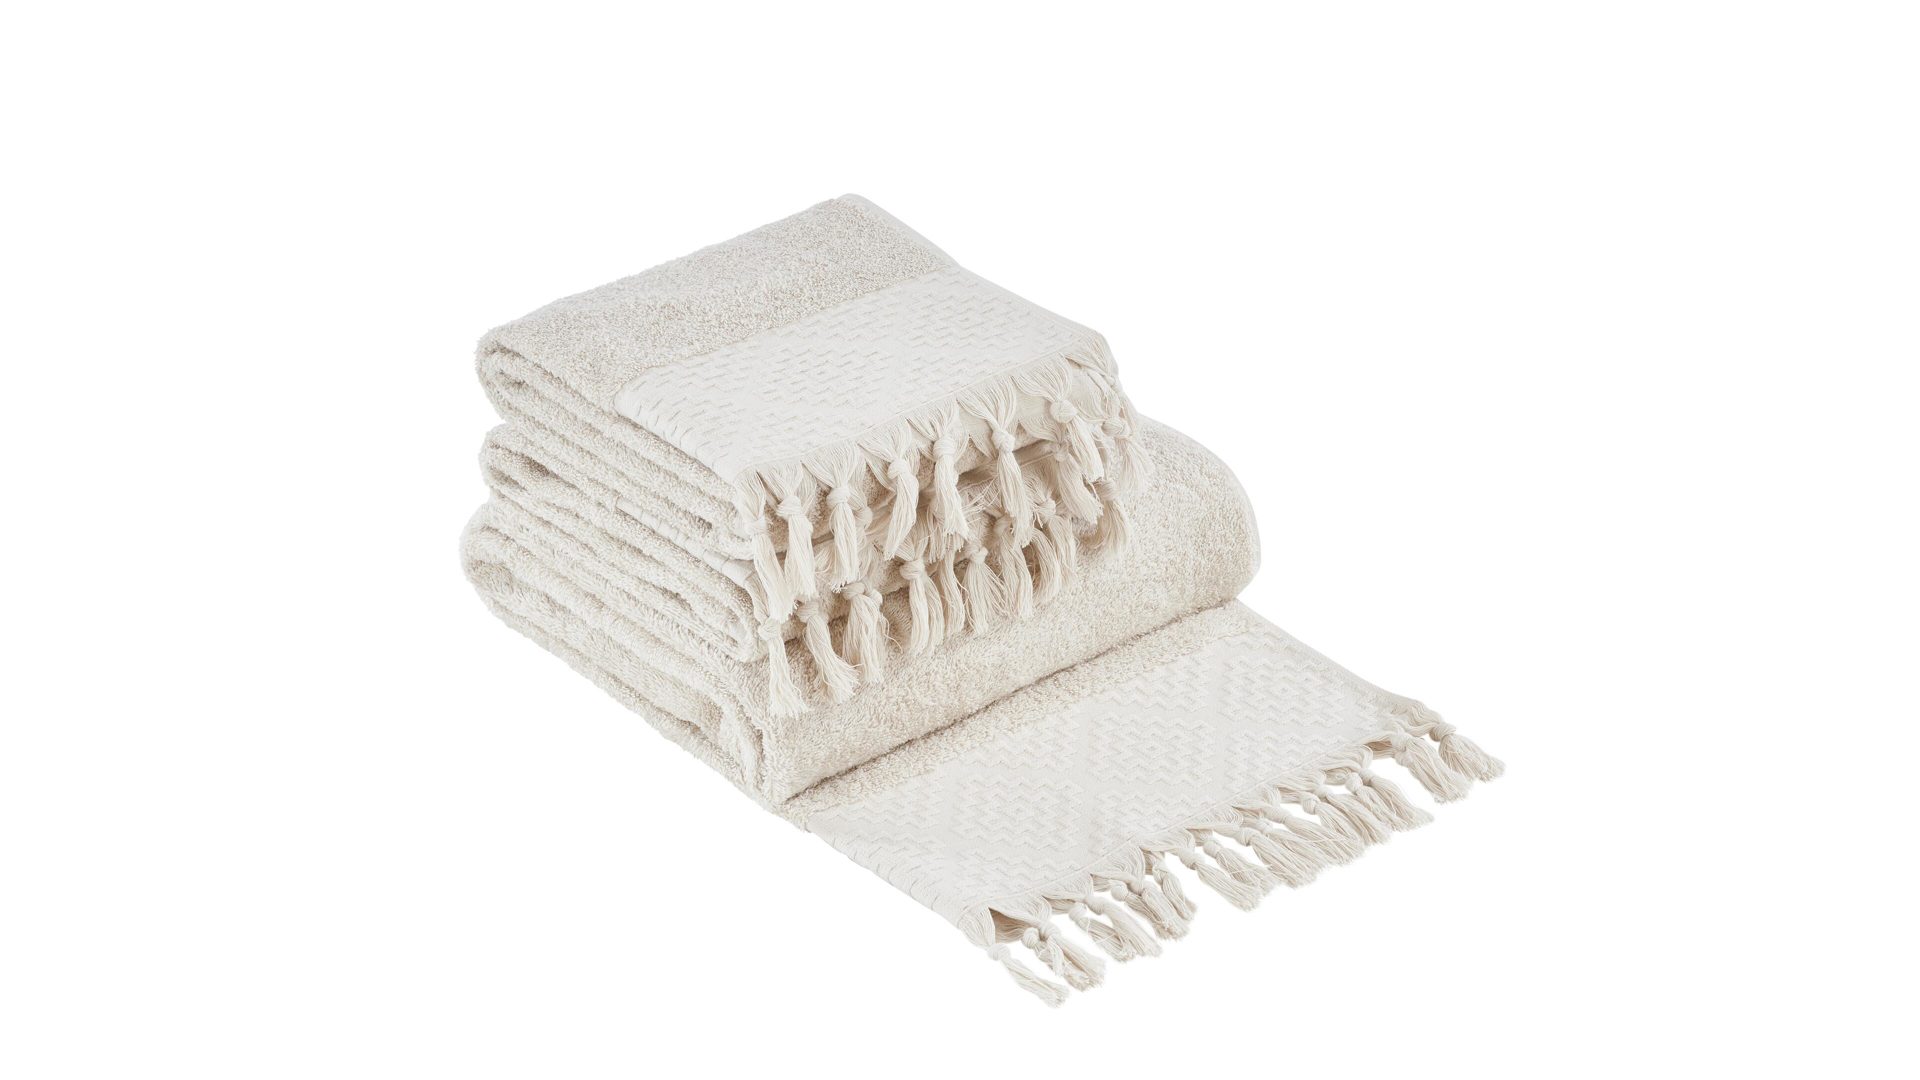 Handtuch-Set Done® by karabel home company aus Stoff in Beige DONE® Handtuch-Set Provence Boheme beige Baumwolle  – dreiteilig